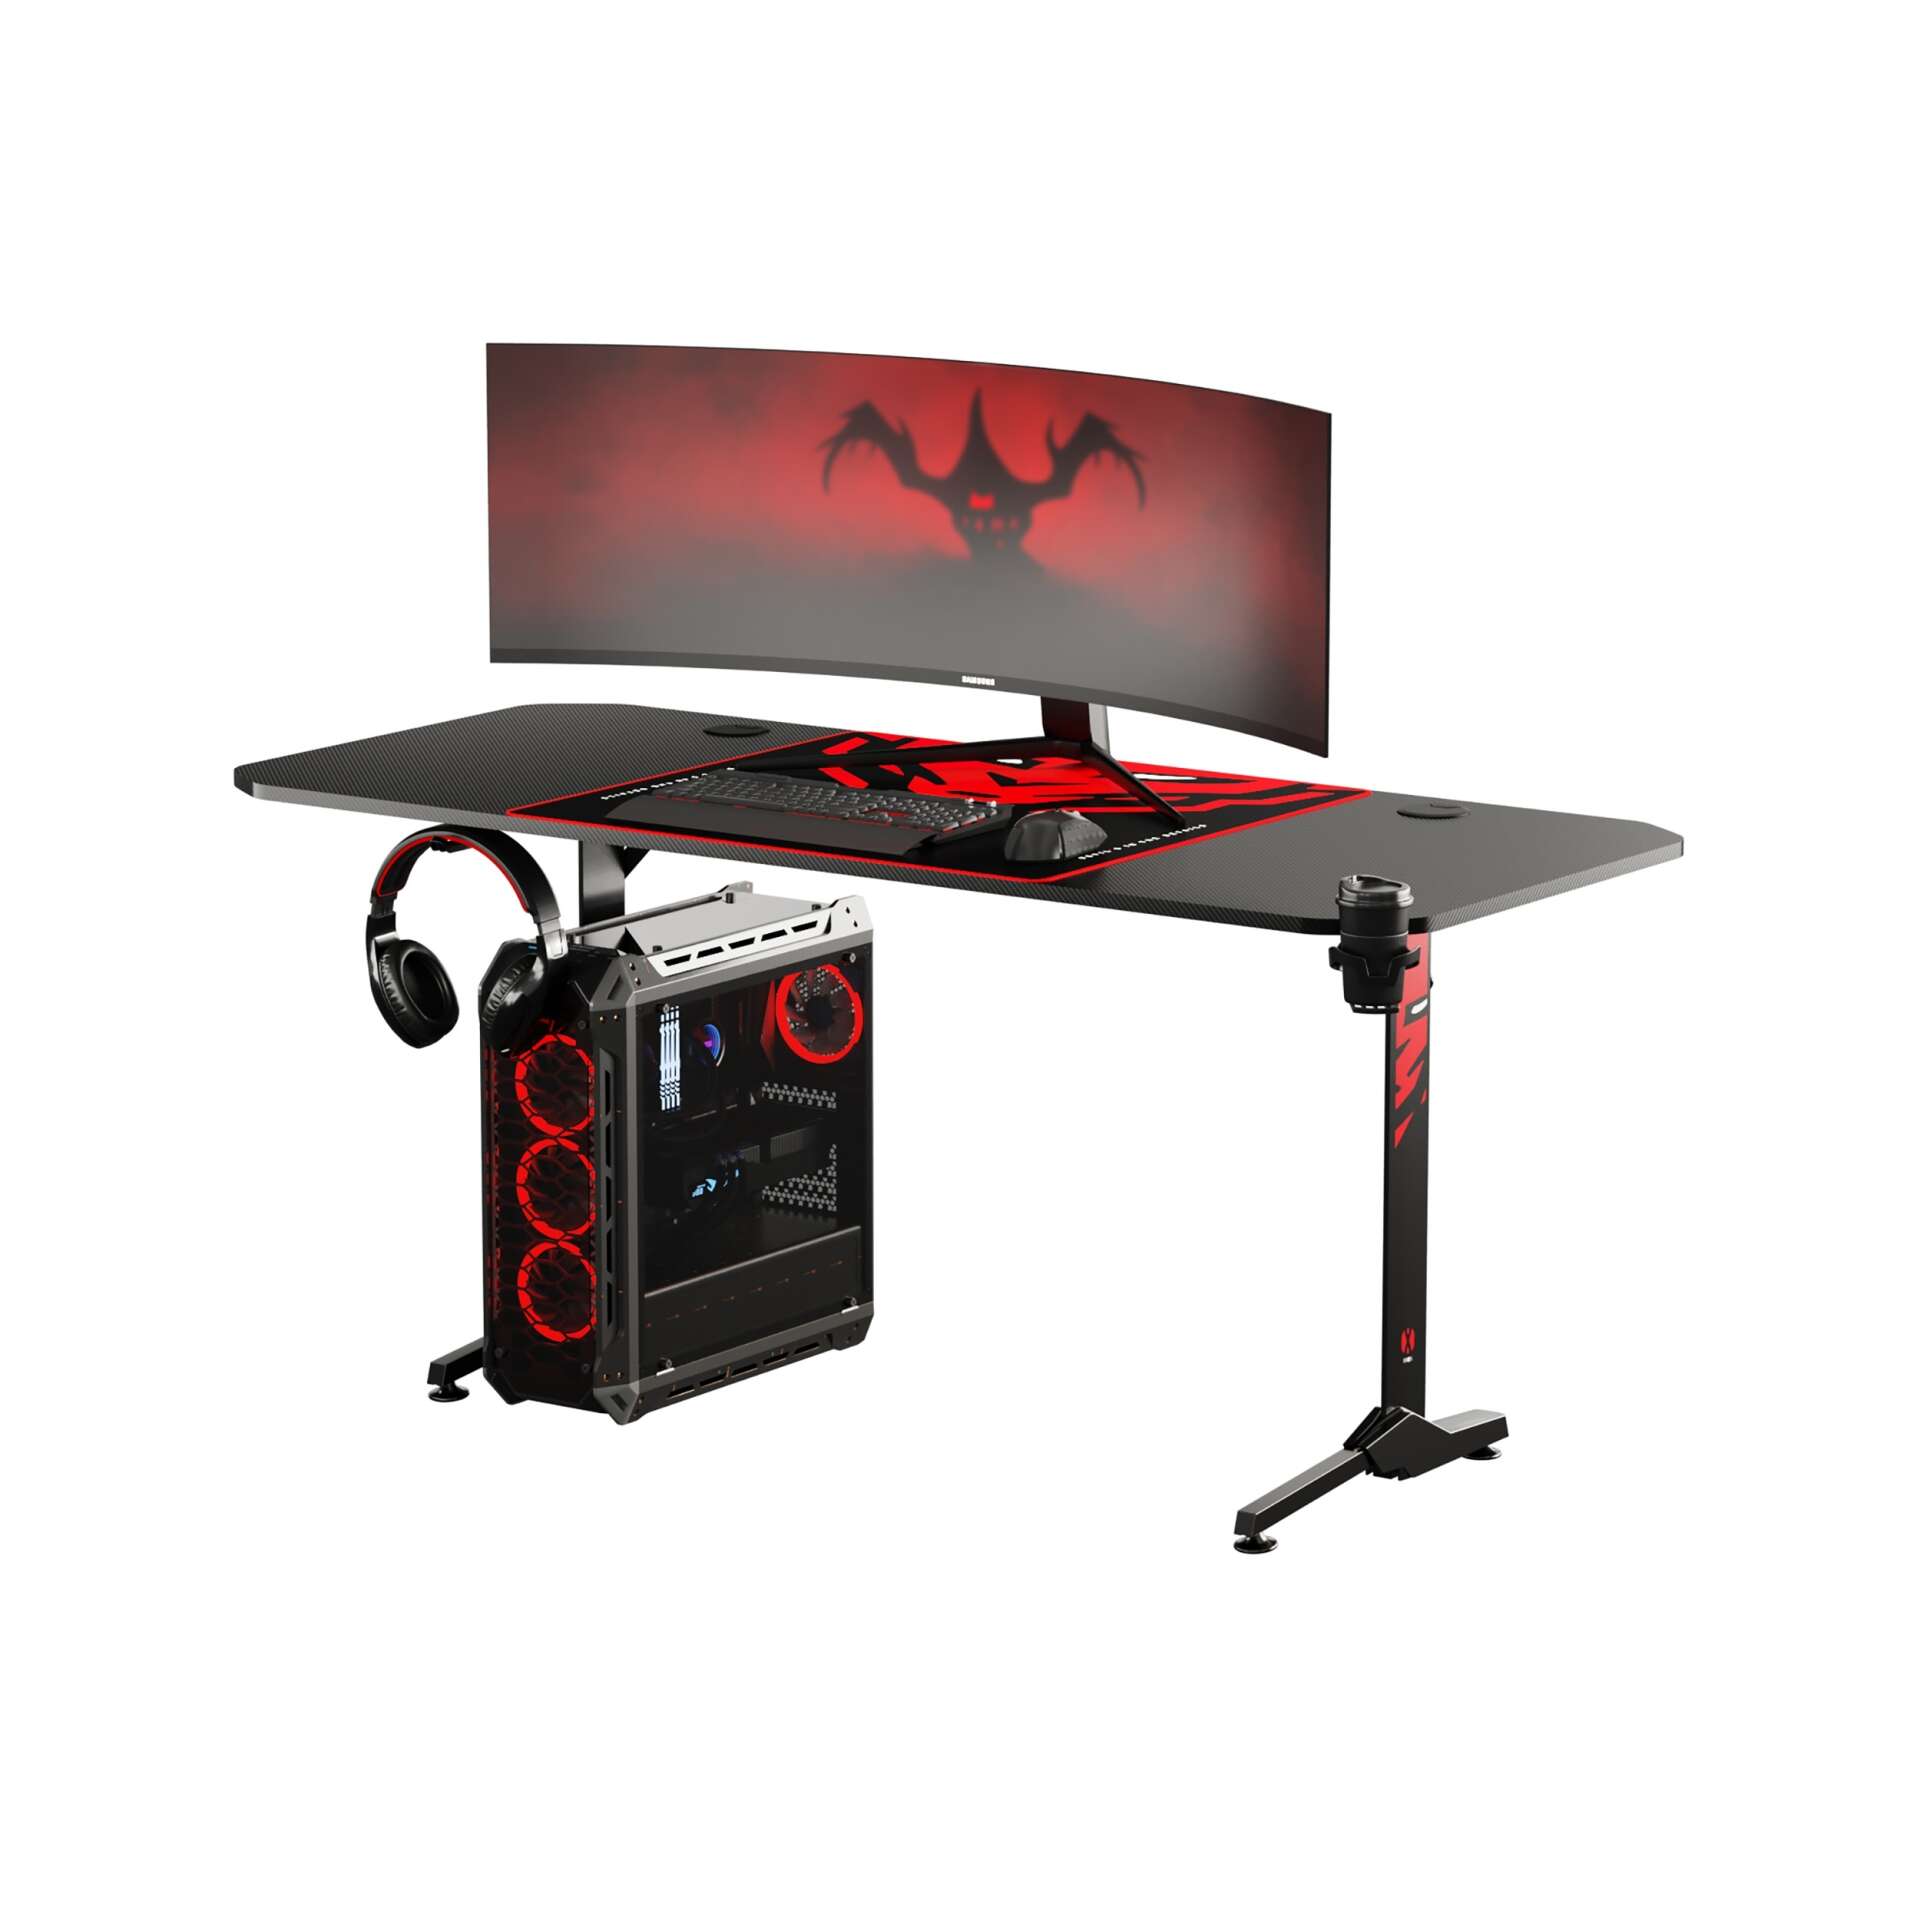 Diablo chairs diablo x-mate 1600 gamer asztal - fekete/piros